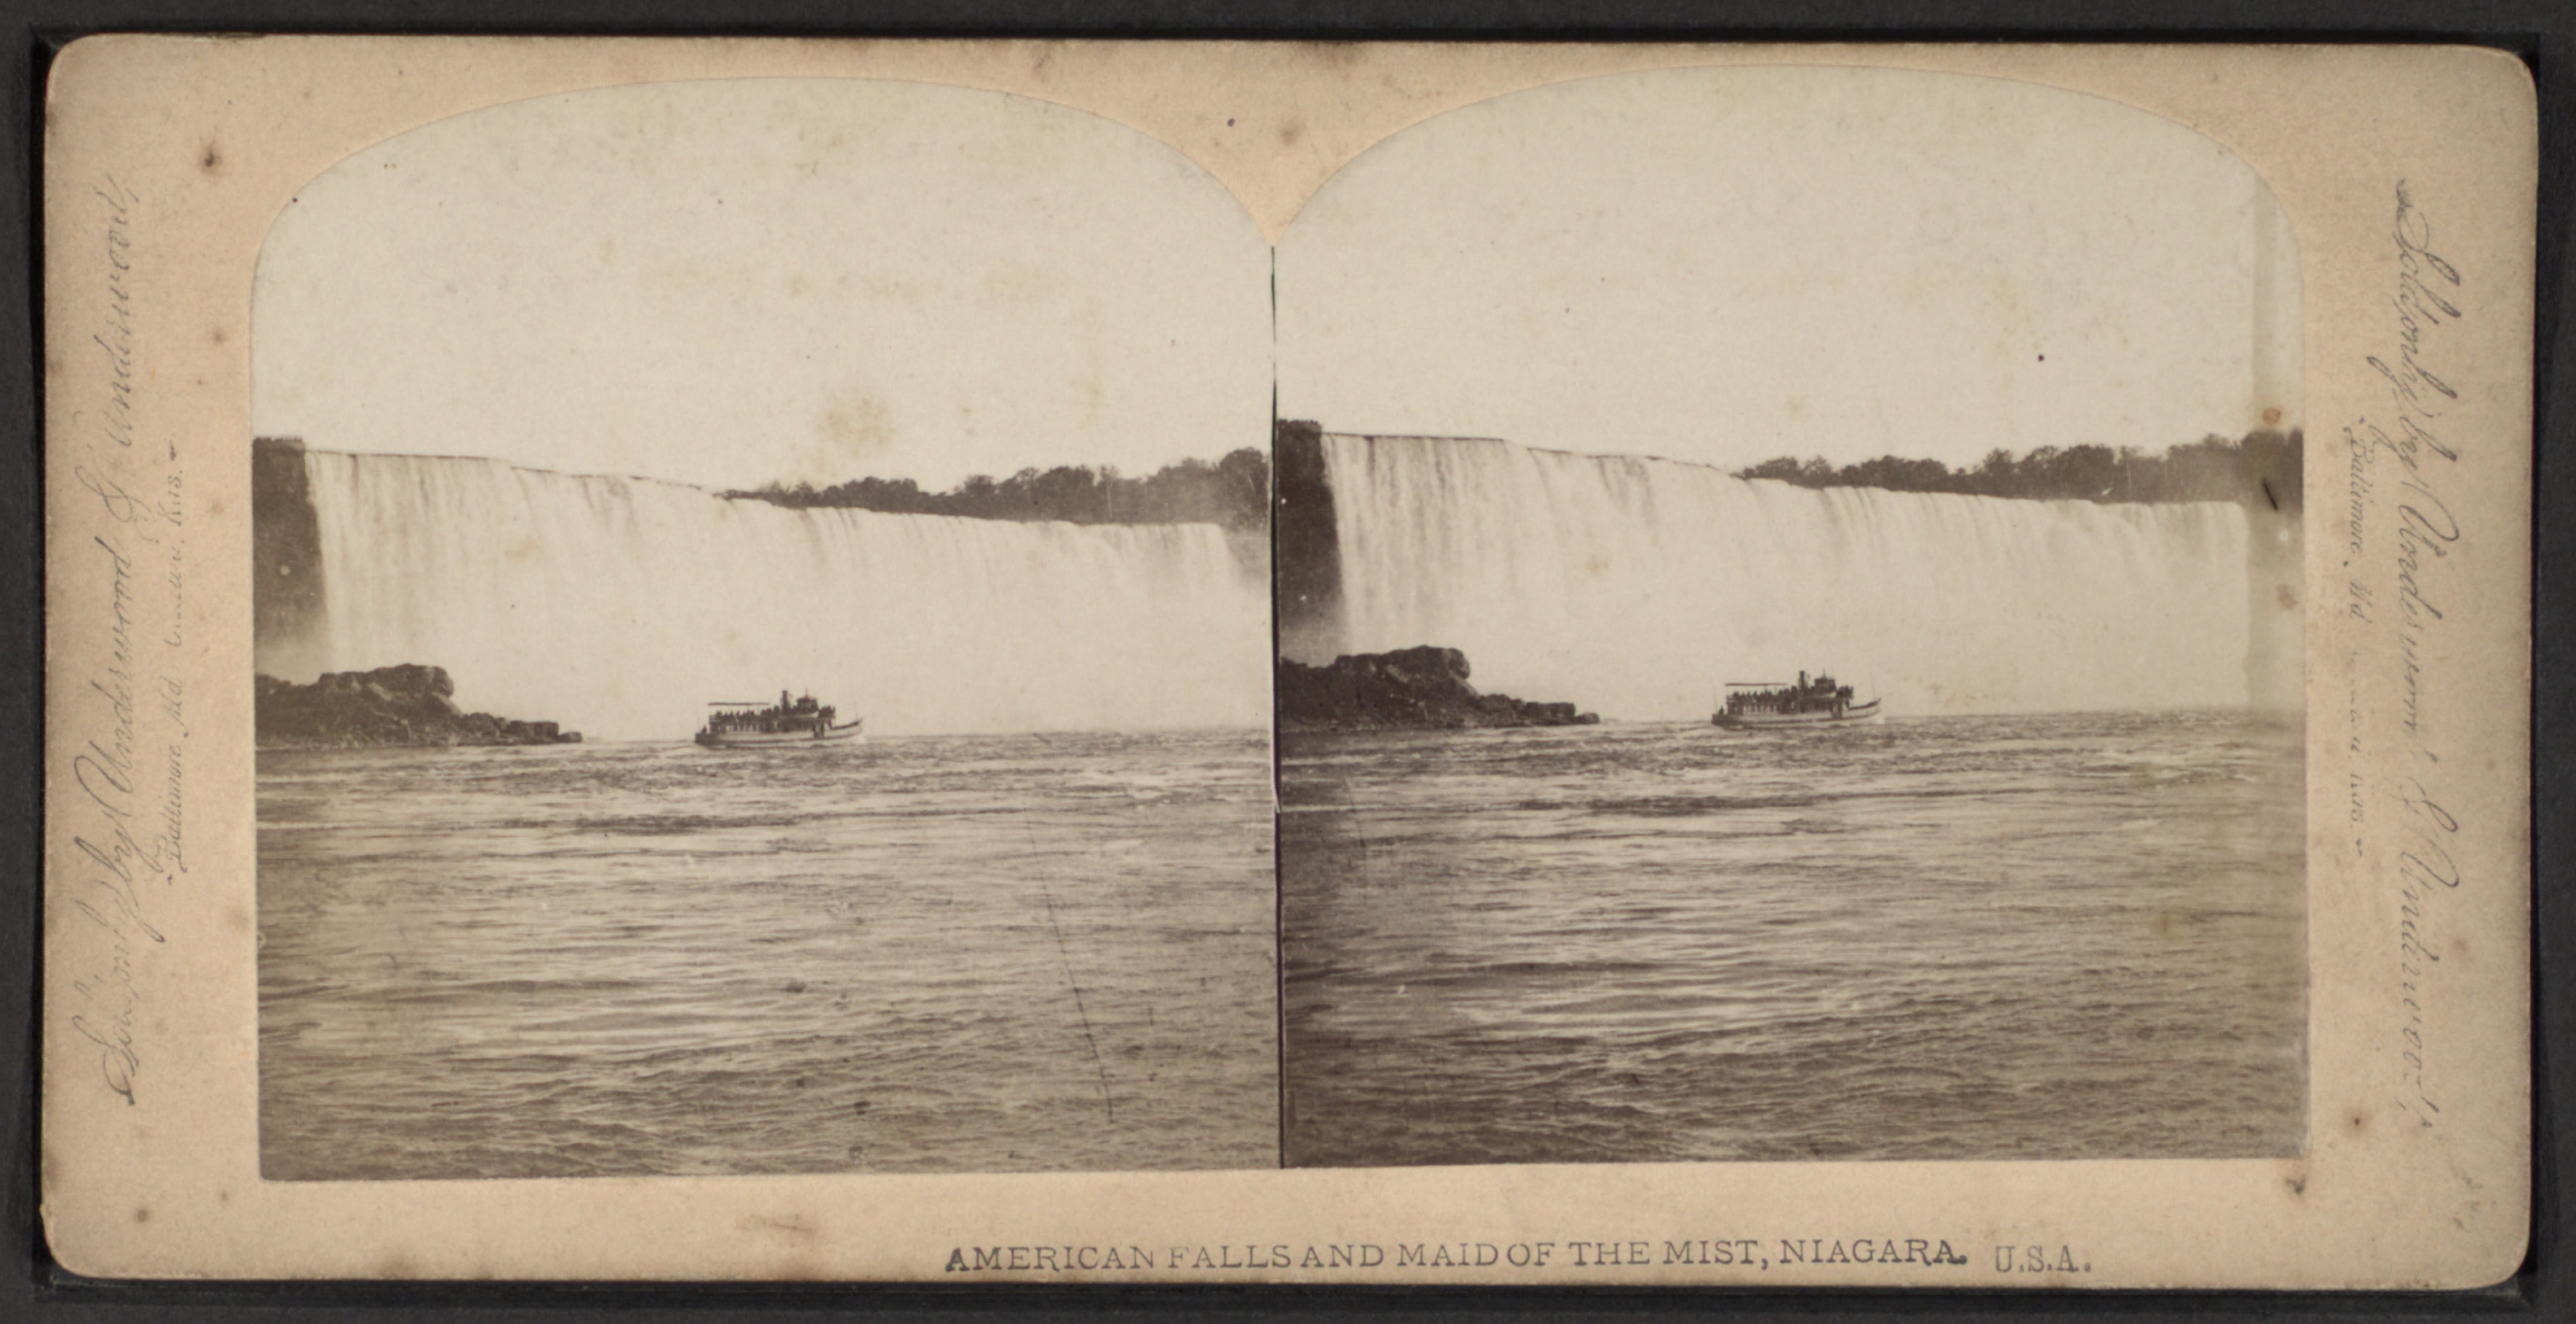 American Falls and Maid of the Mist, Niagara, U.S.A, by Underwood & Underwood